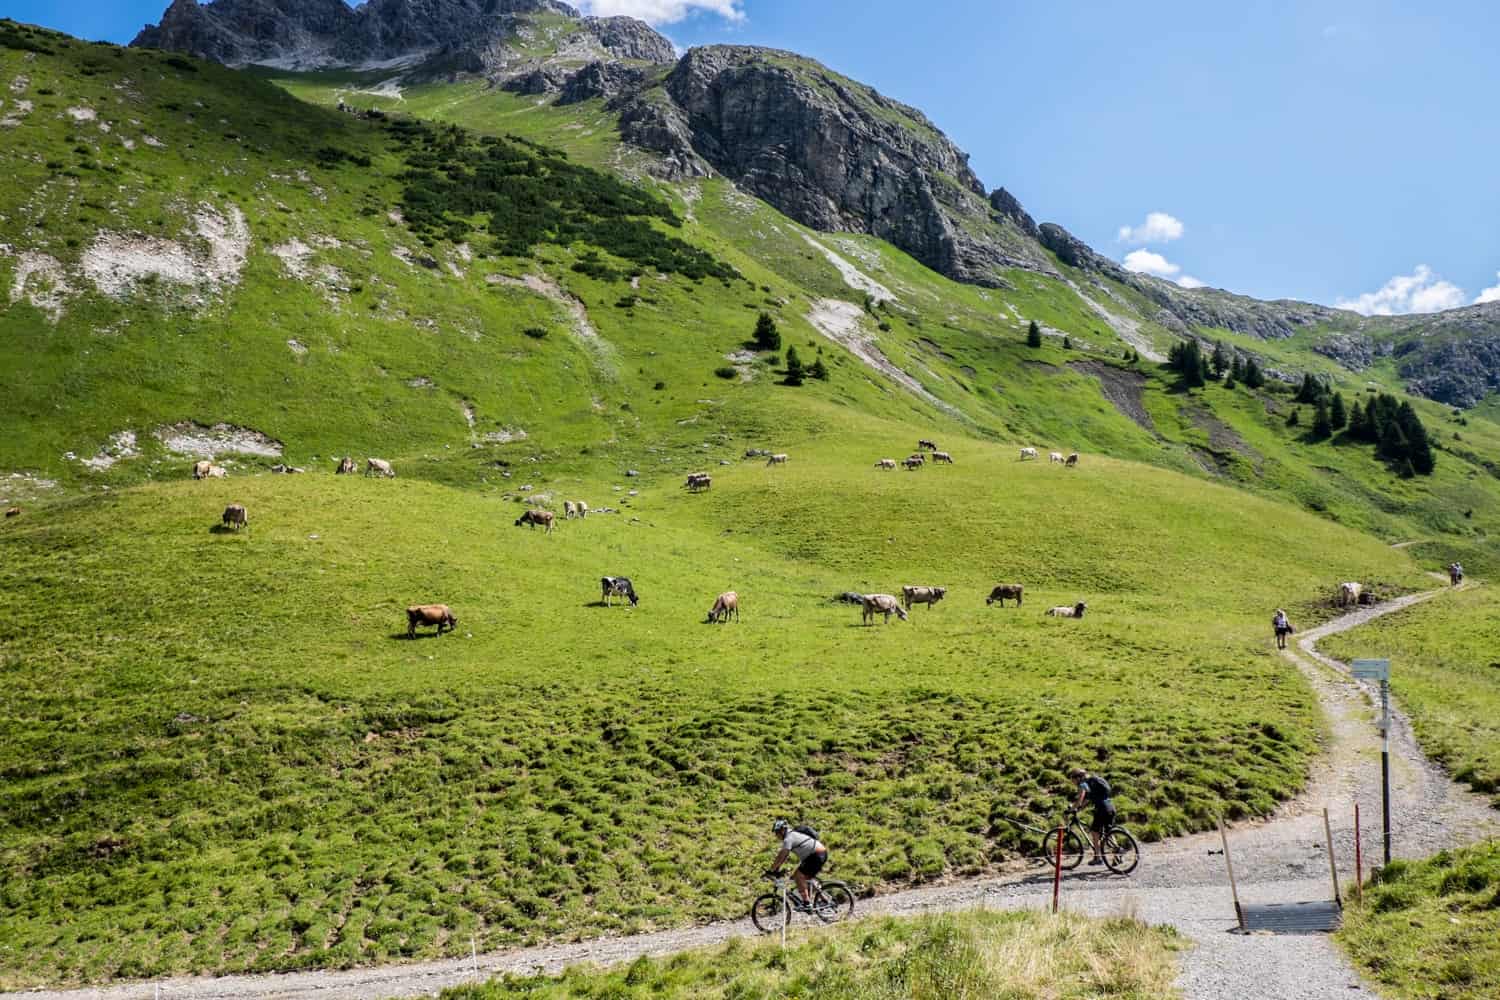 People hiking and biking in the Lech alpine, Austria